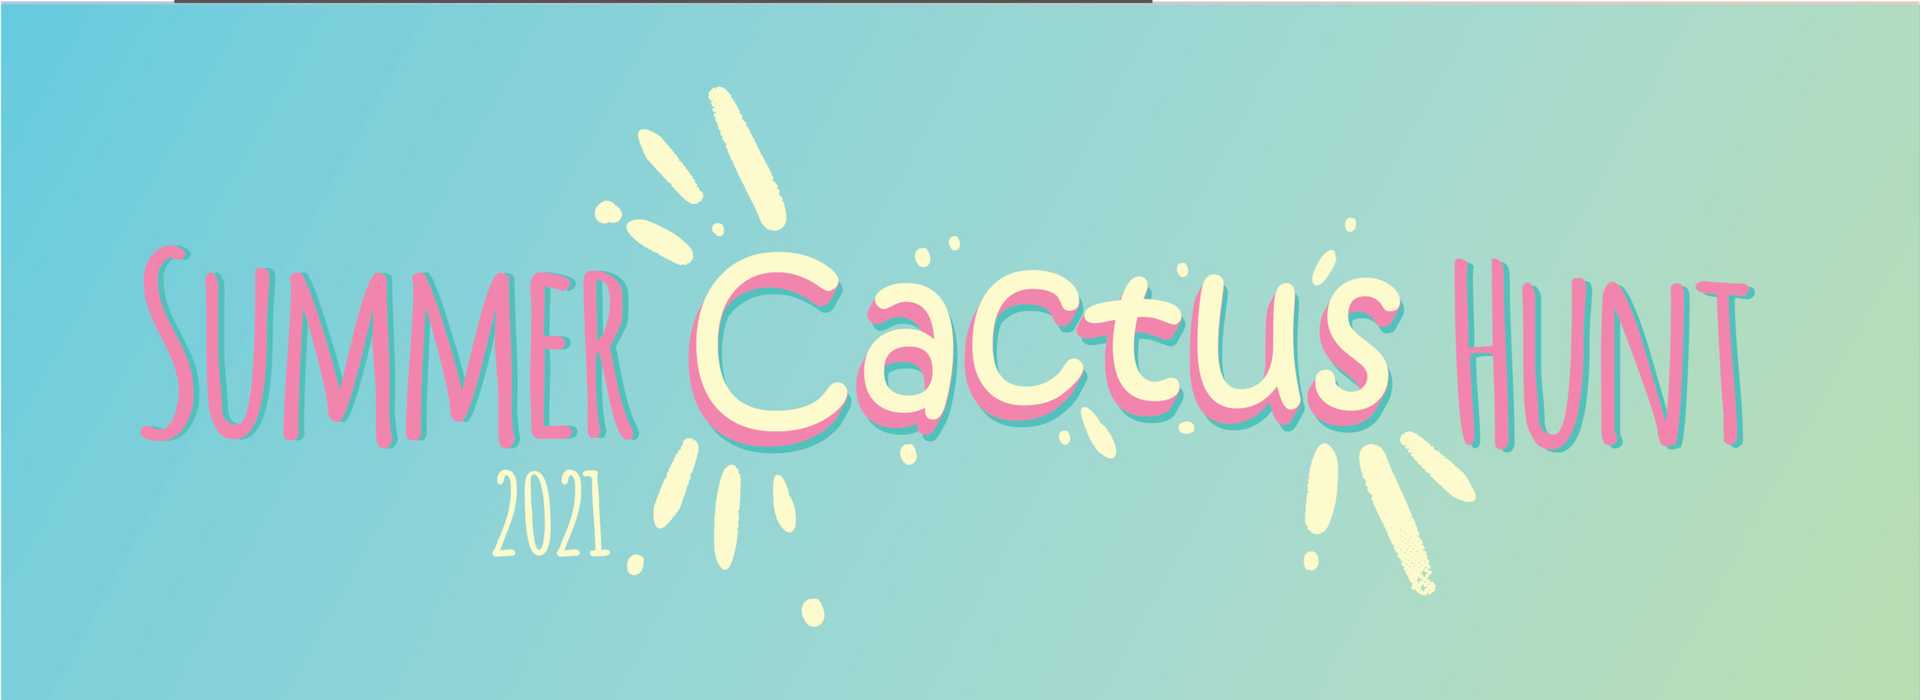 Summer Cactus Hunt Blog 01